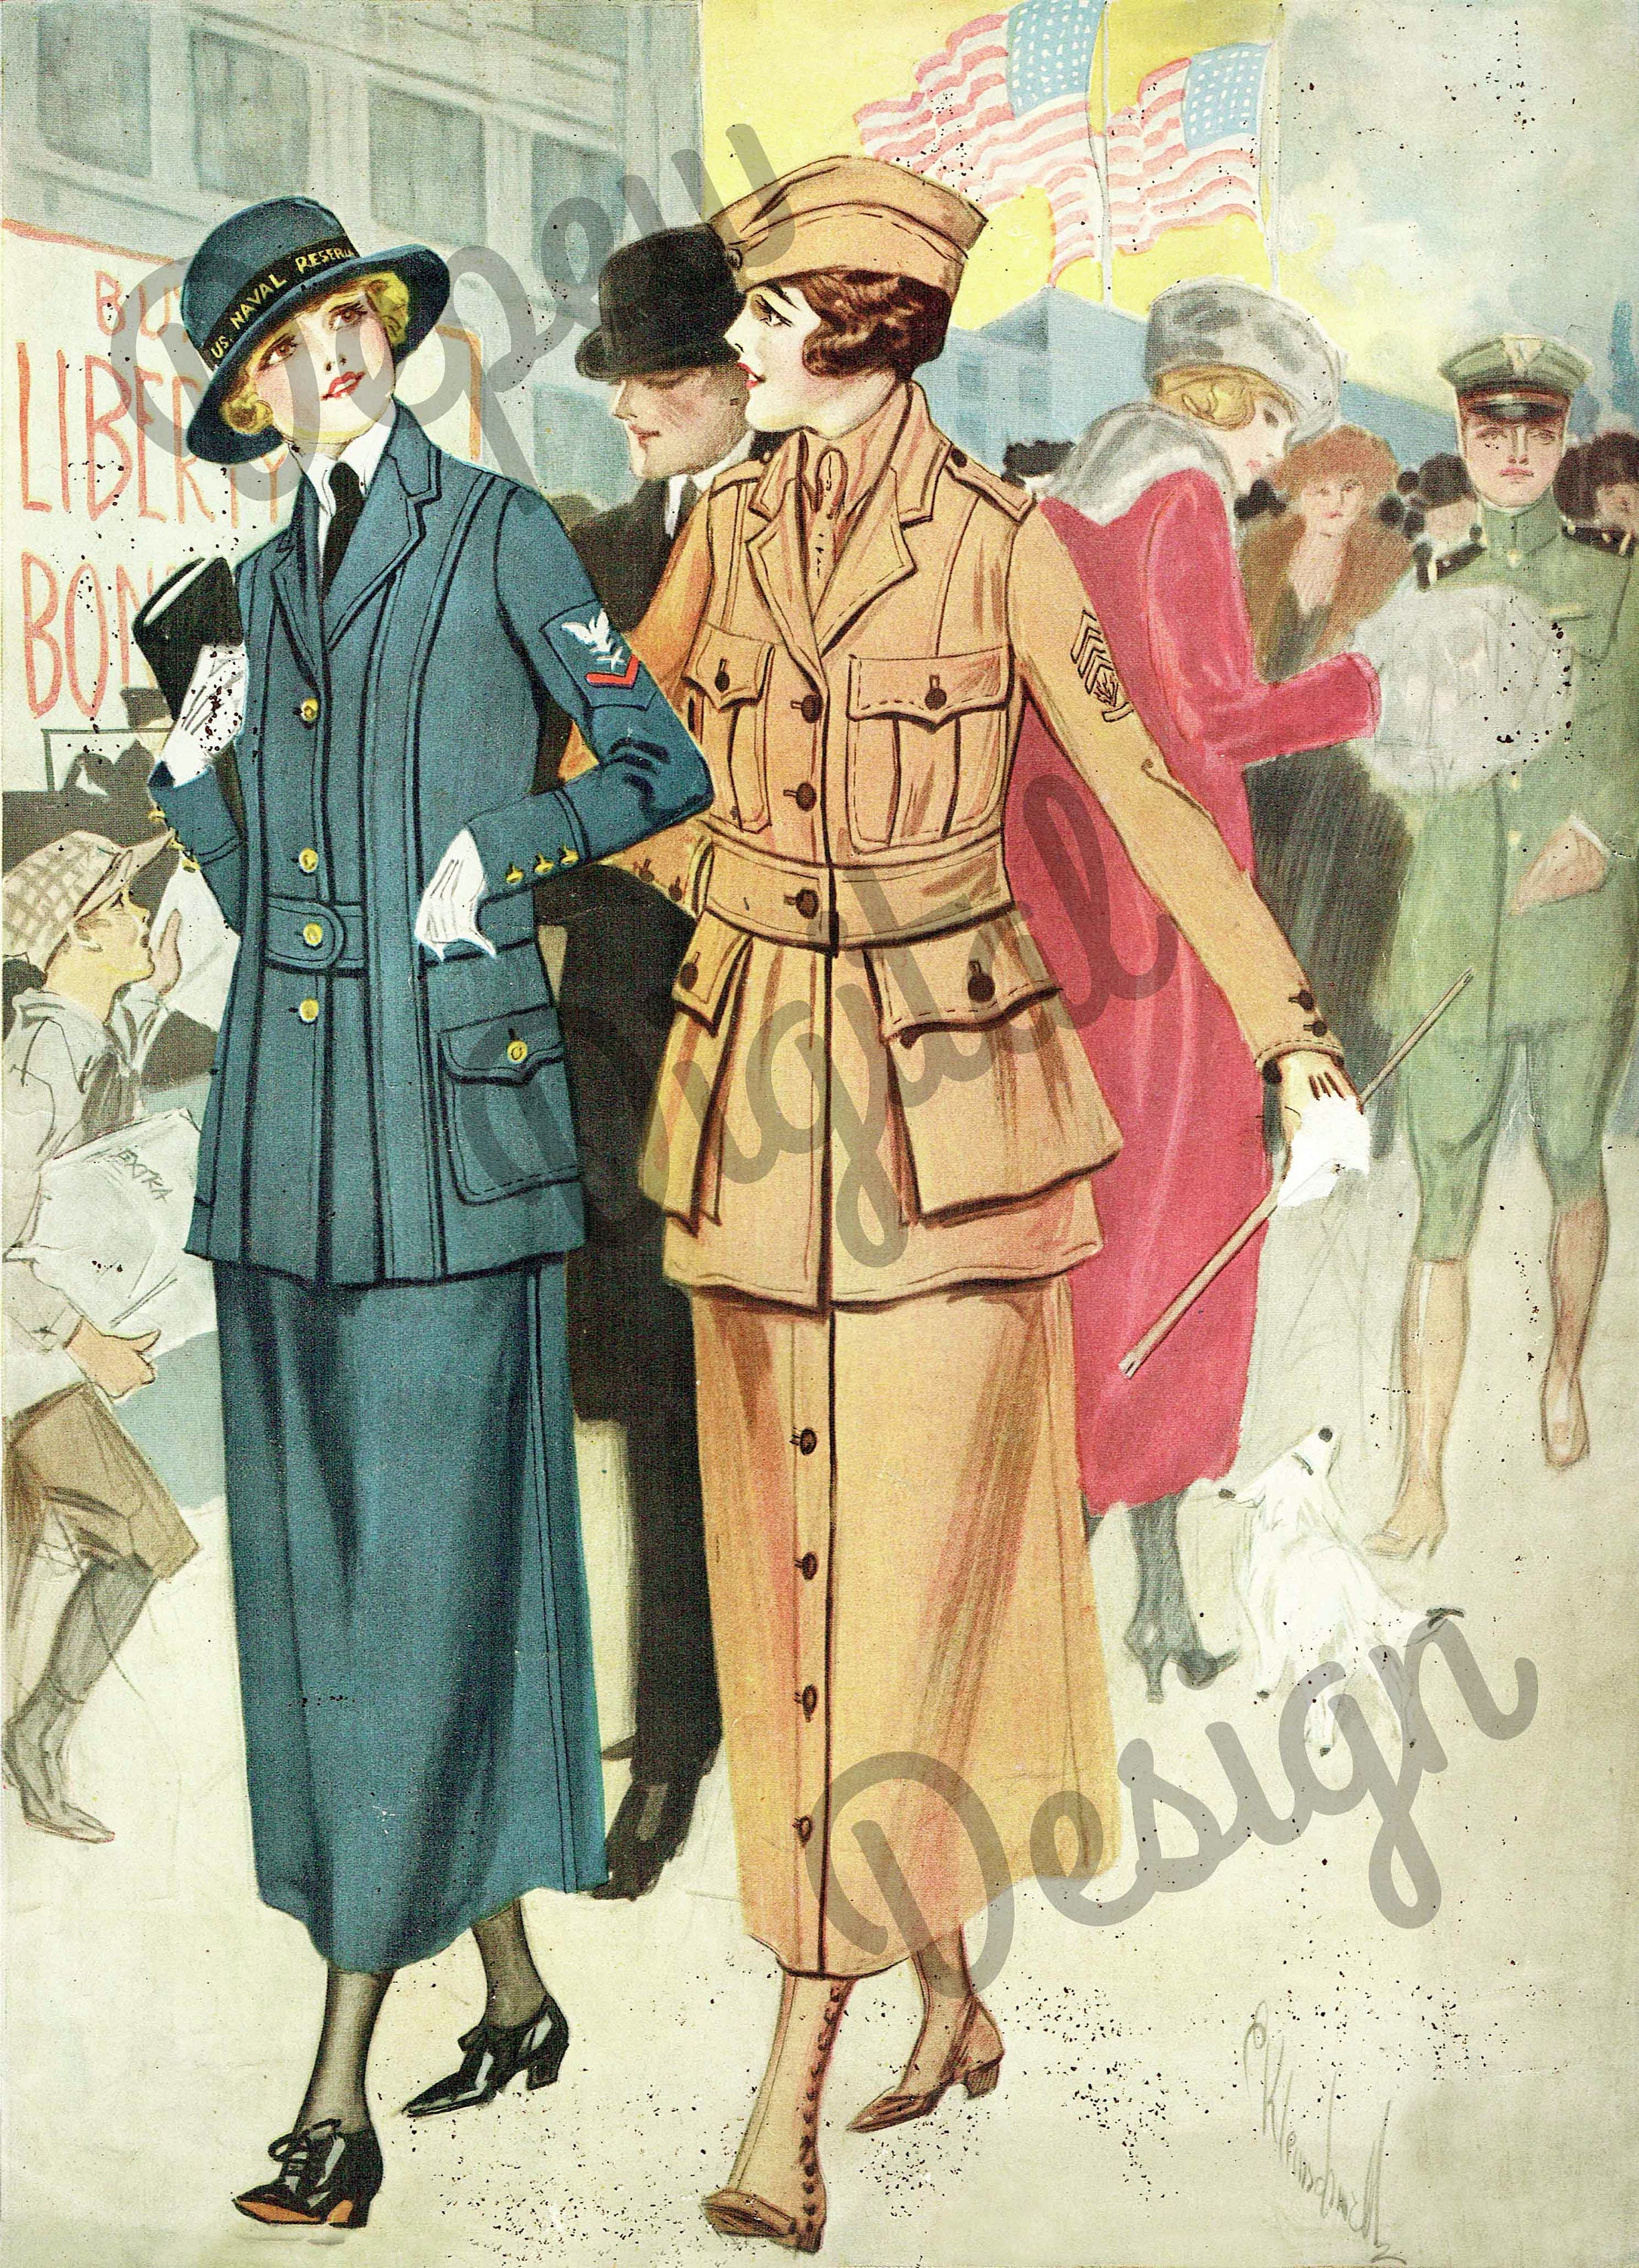 Women's Military Clothing